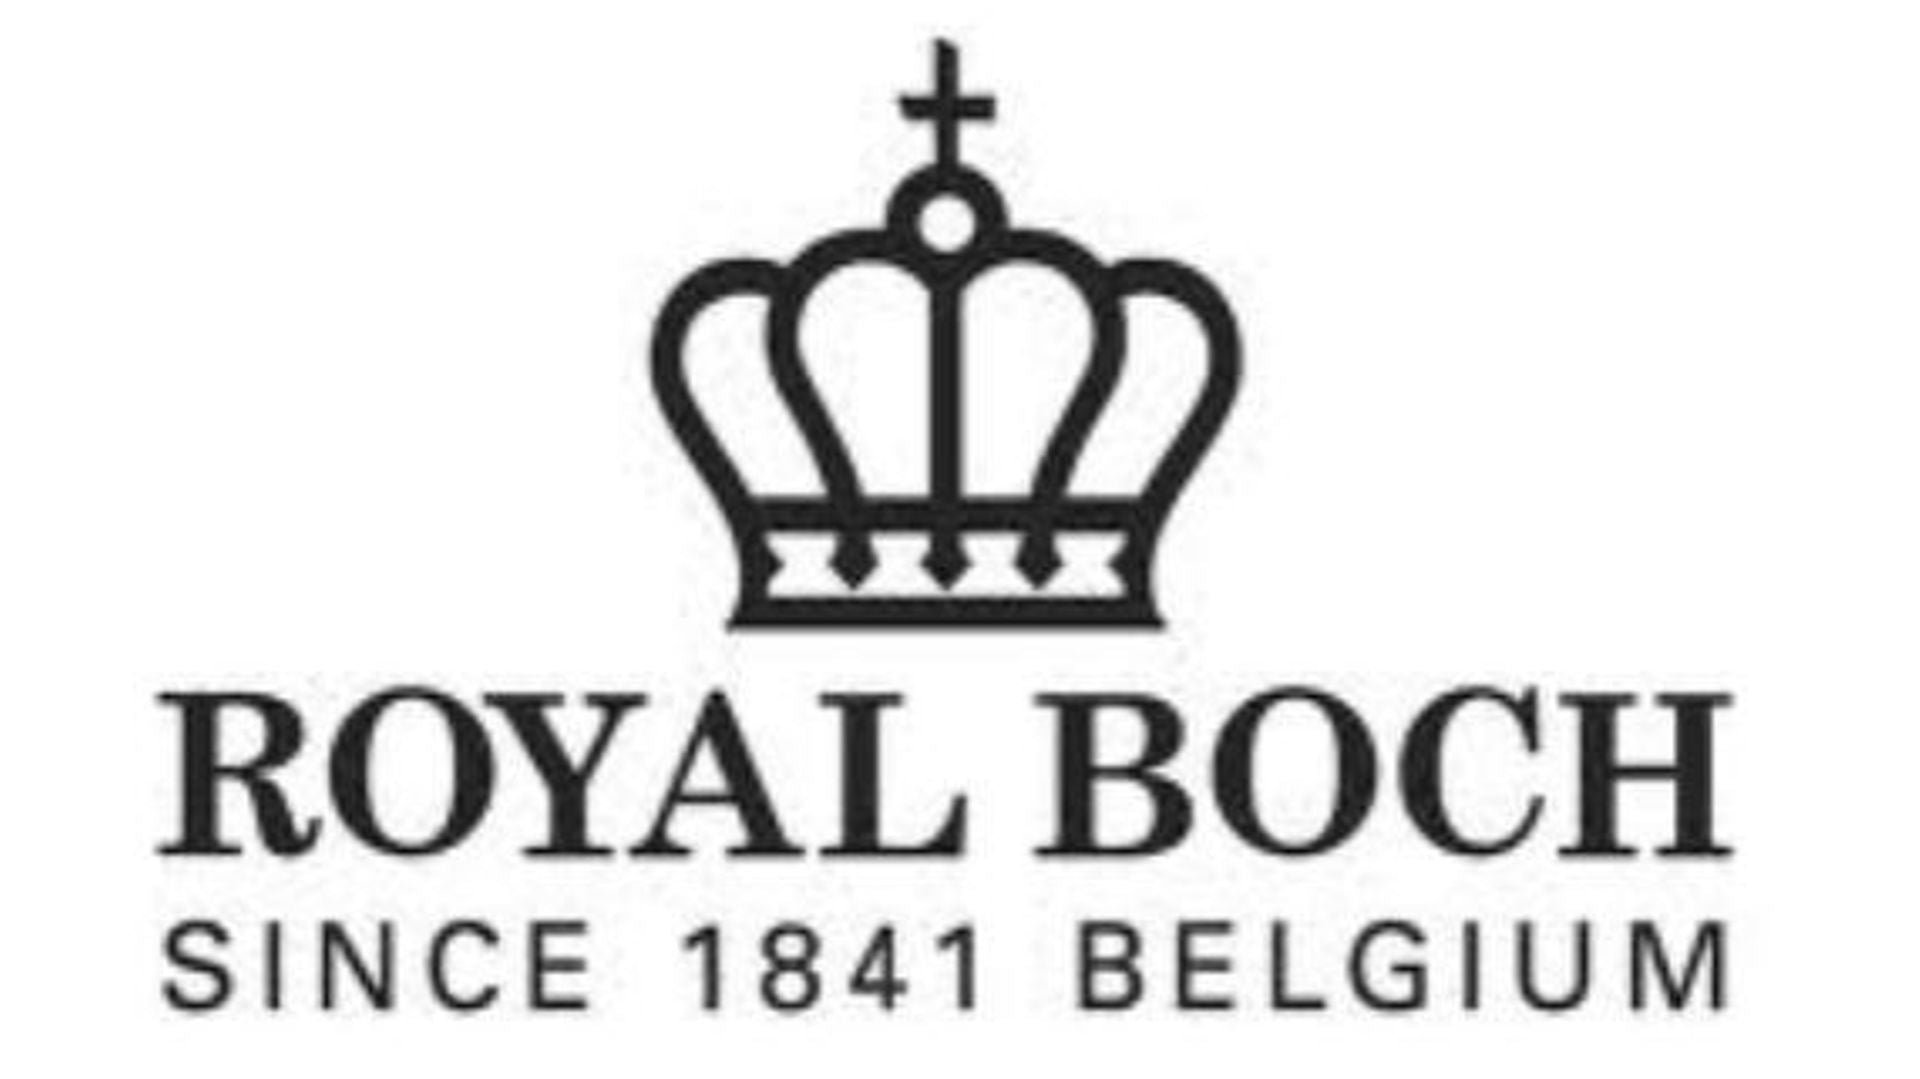 Royal Boch - Boerenbont - Big Bite Dutch Treats